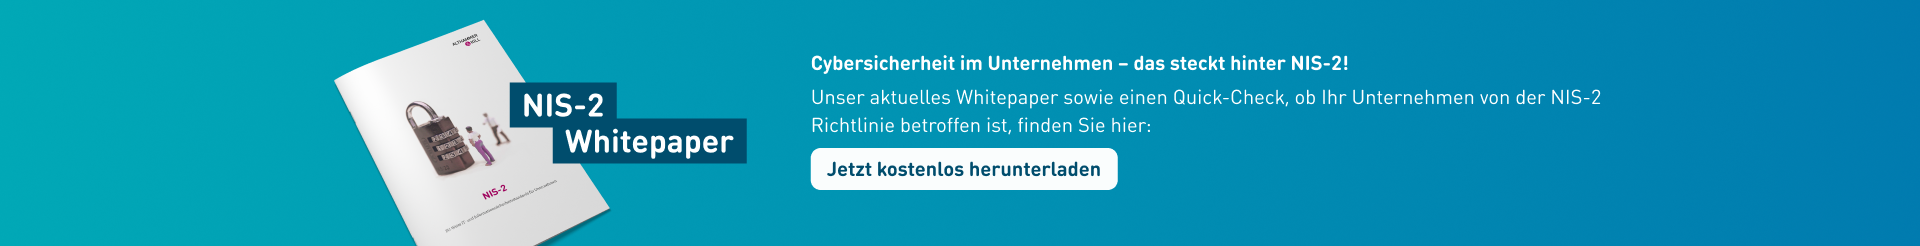 Whitepaper NIS-2